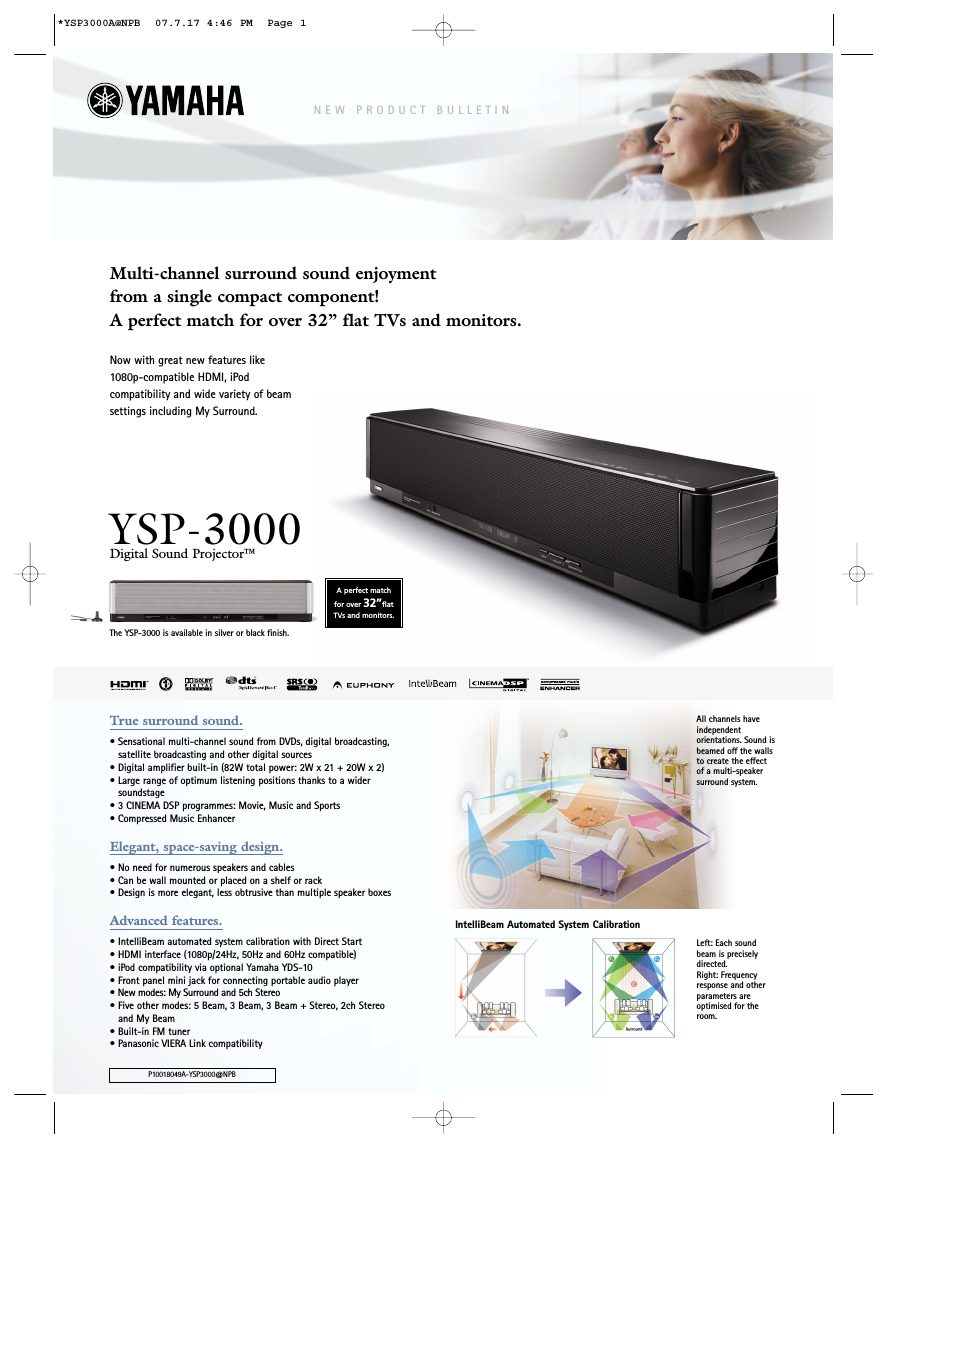 Digital Sound Projector YSP-3000